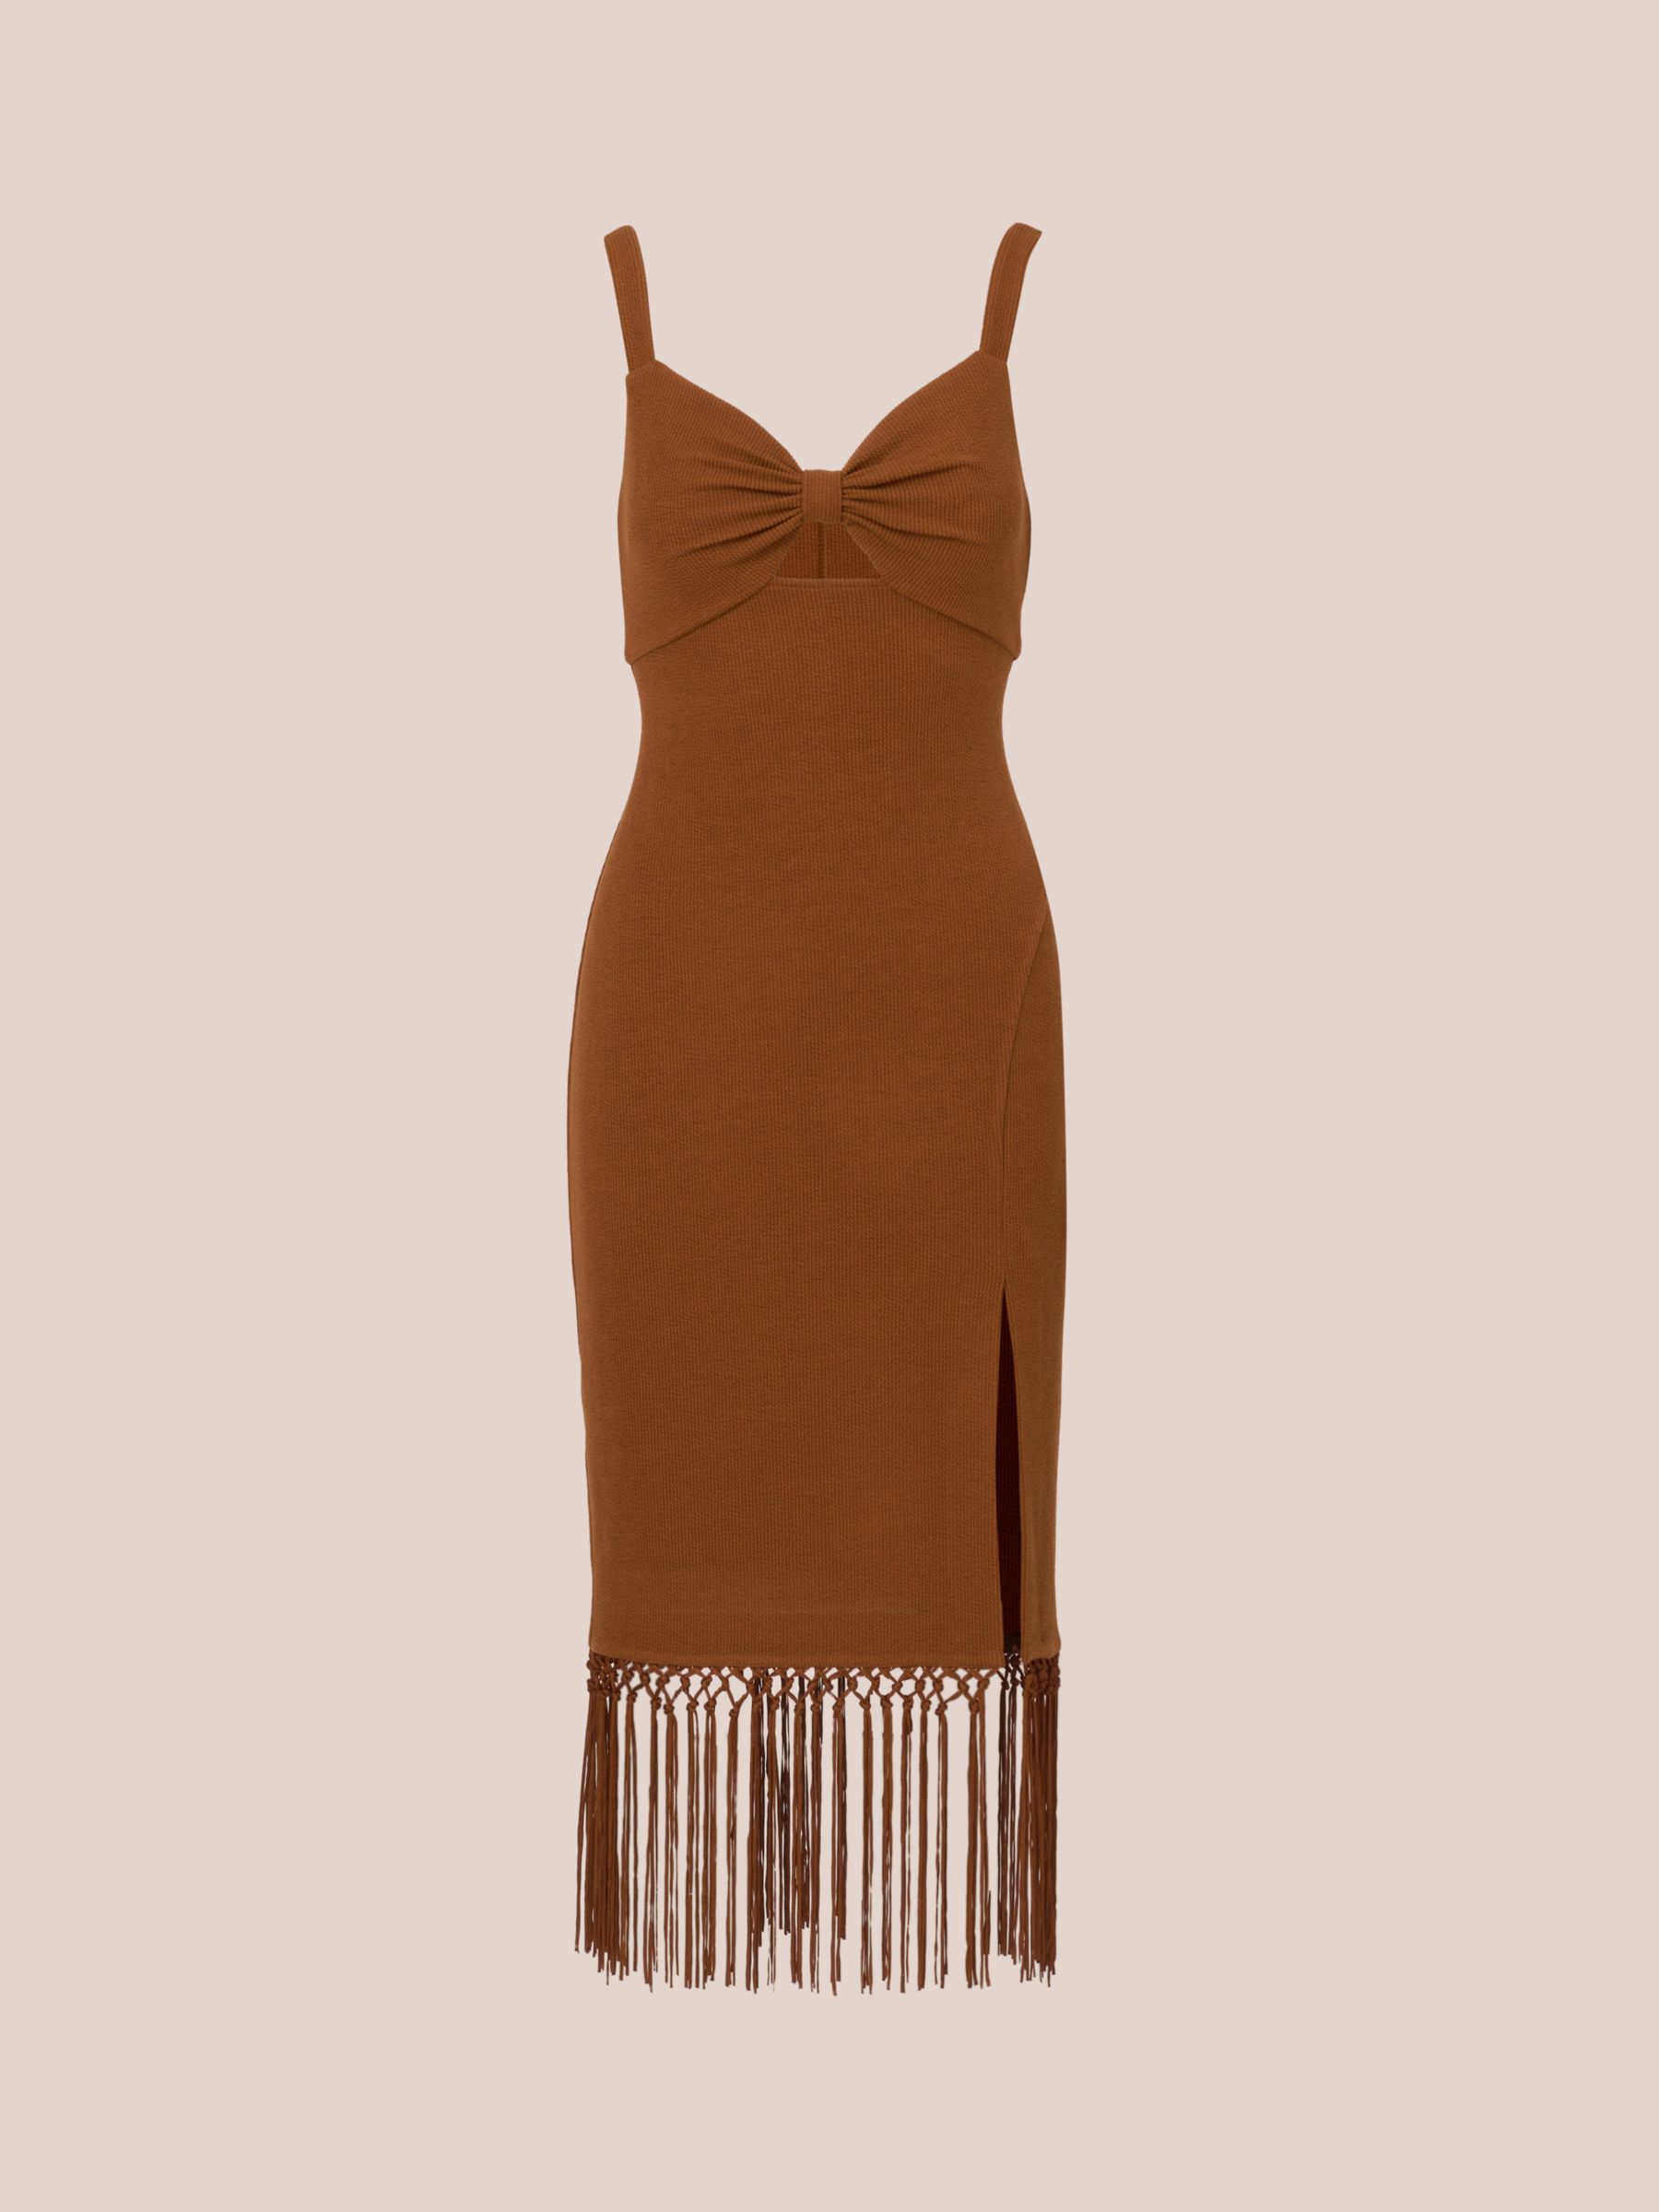 Adrianna Papell Knit Fringe Trim Midi Dress, Cinnamon, 6